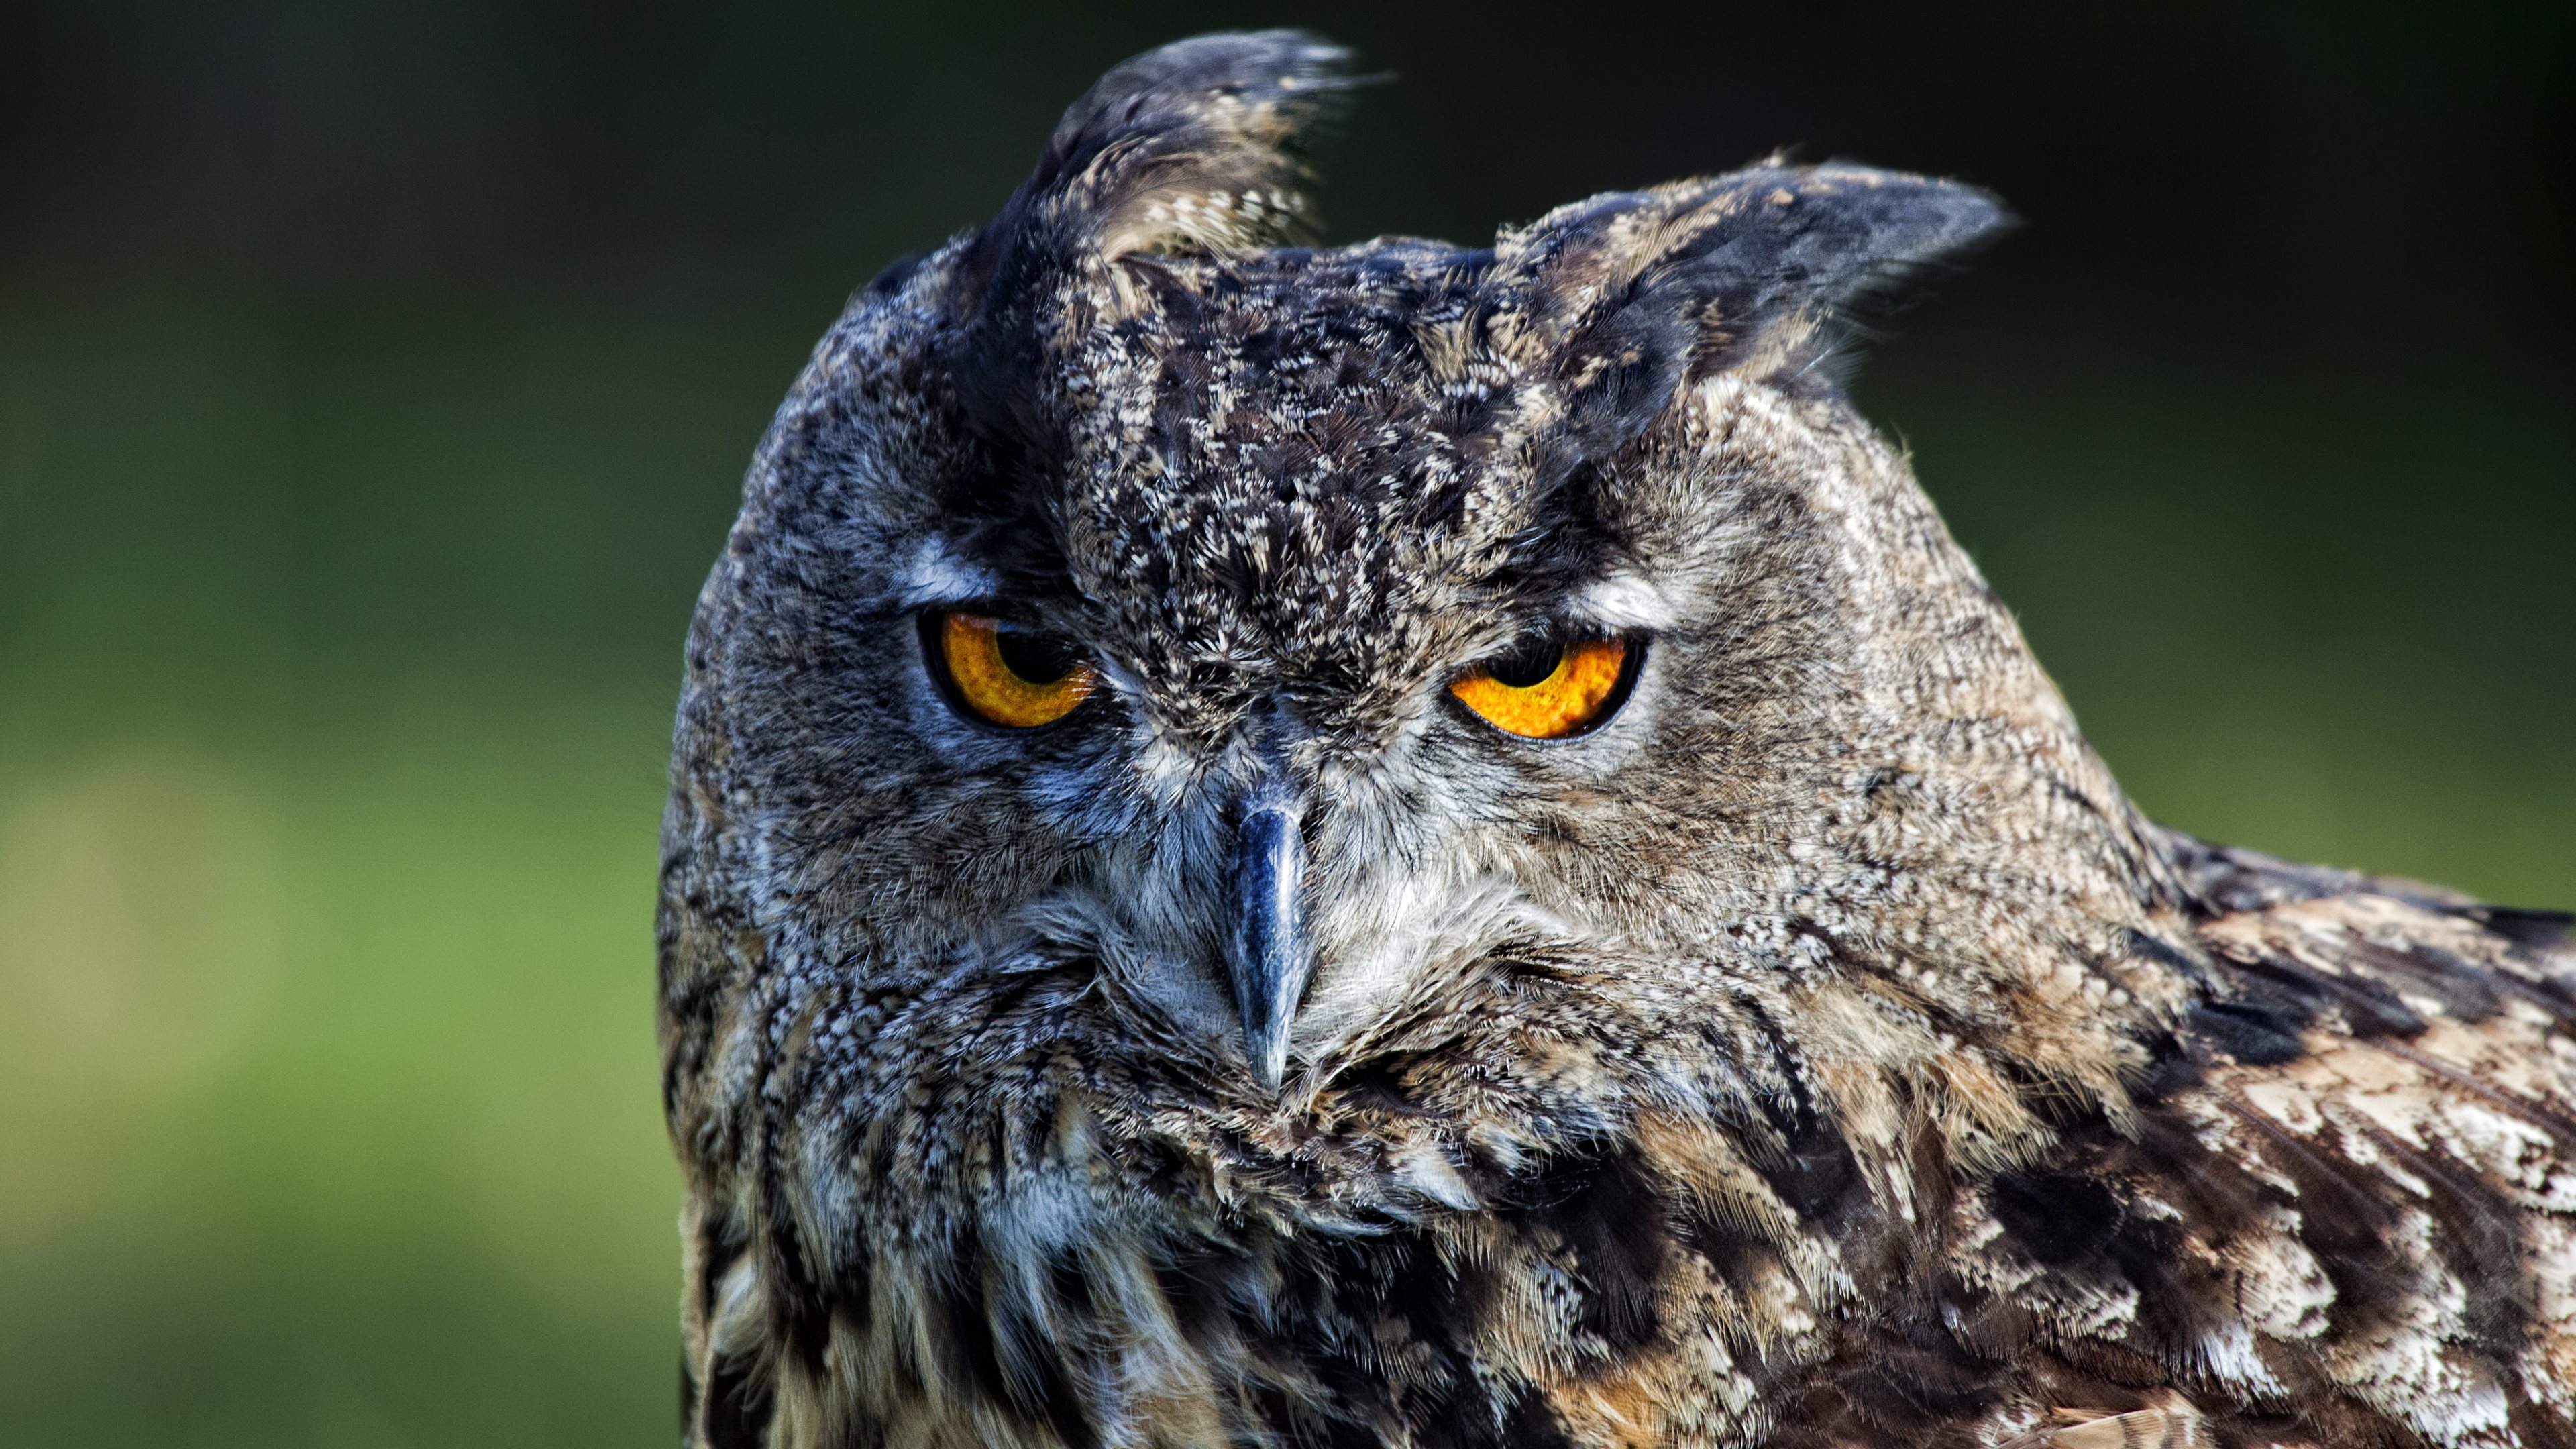 Image: Bird, long-eared owl, feathers, eyes, wind